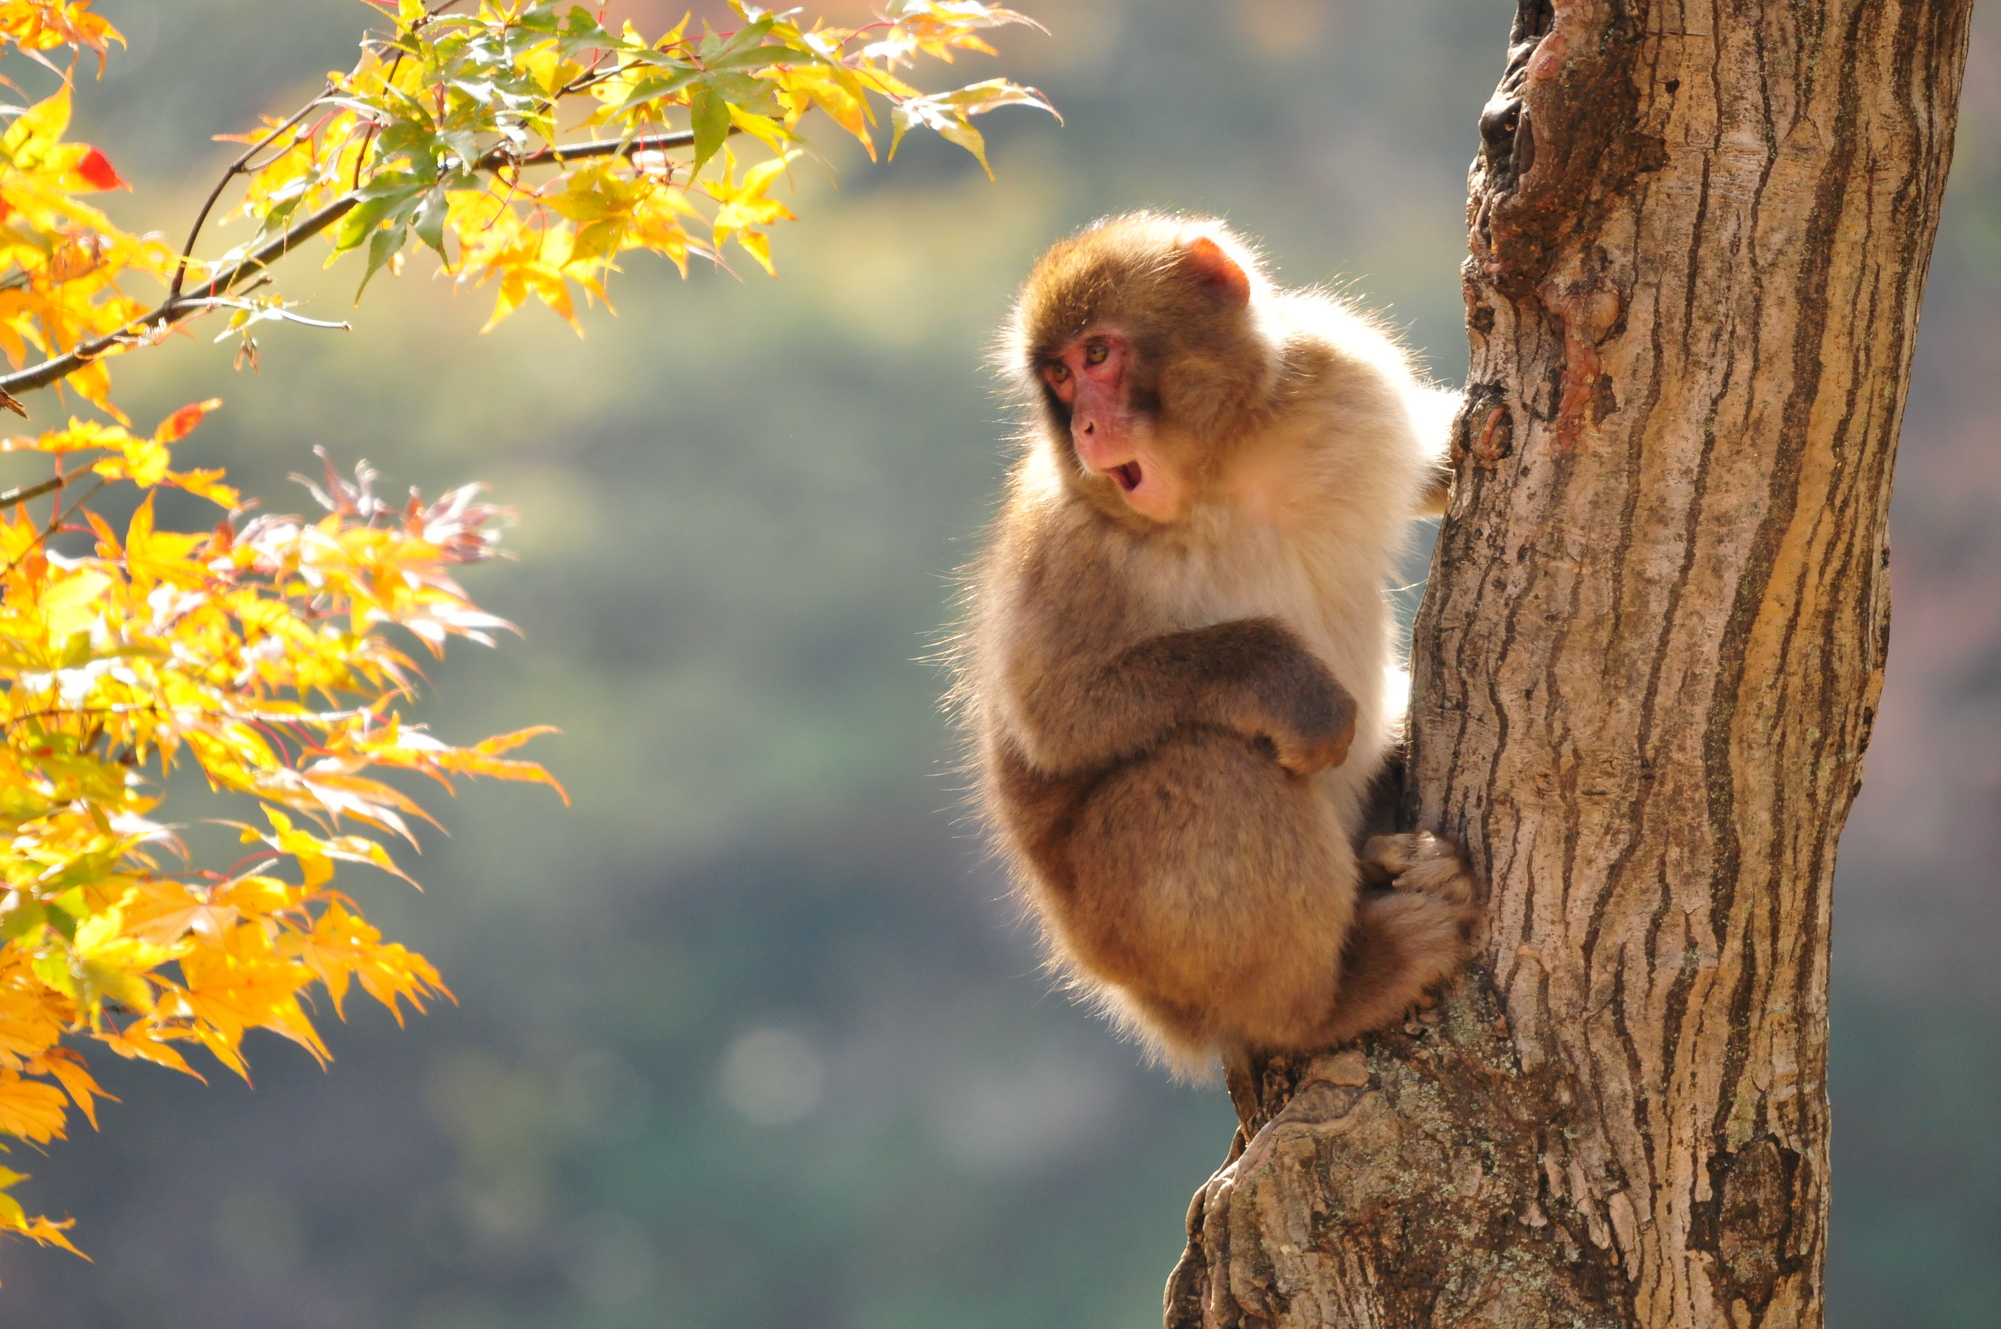 Explore Yamanouchi - Home of the Snow Monkeys